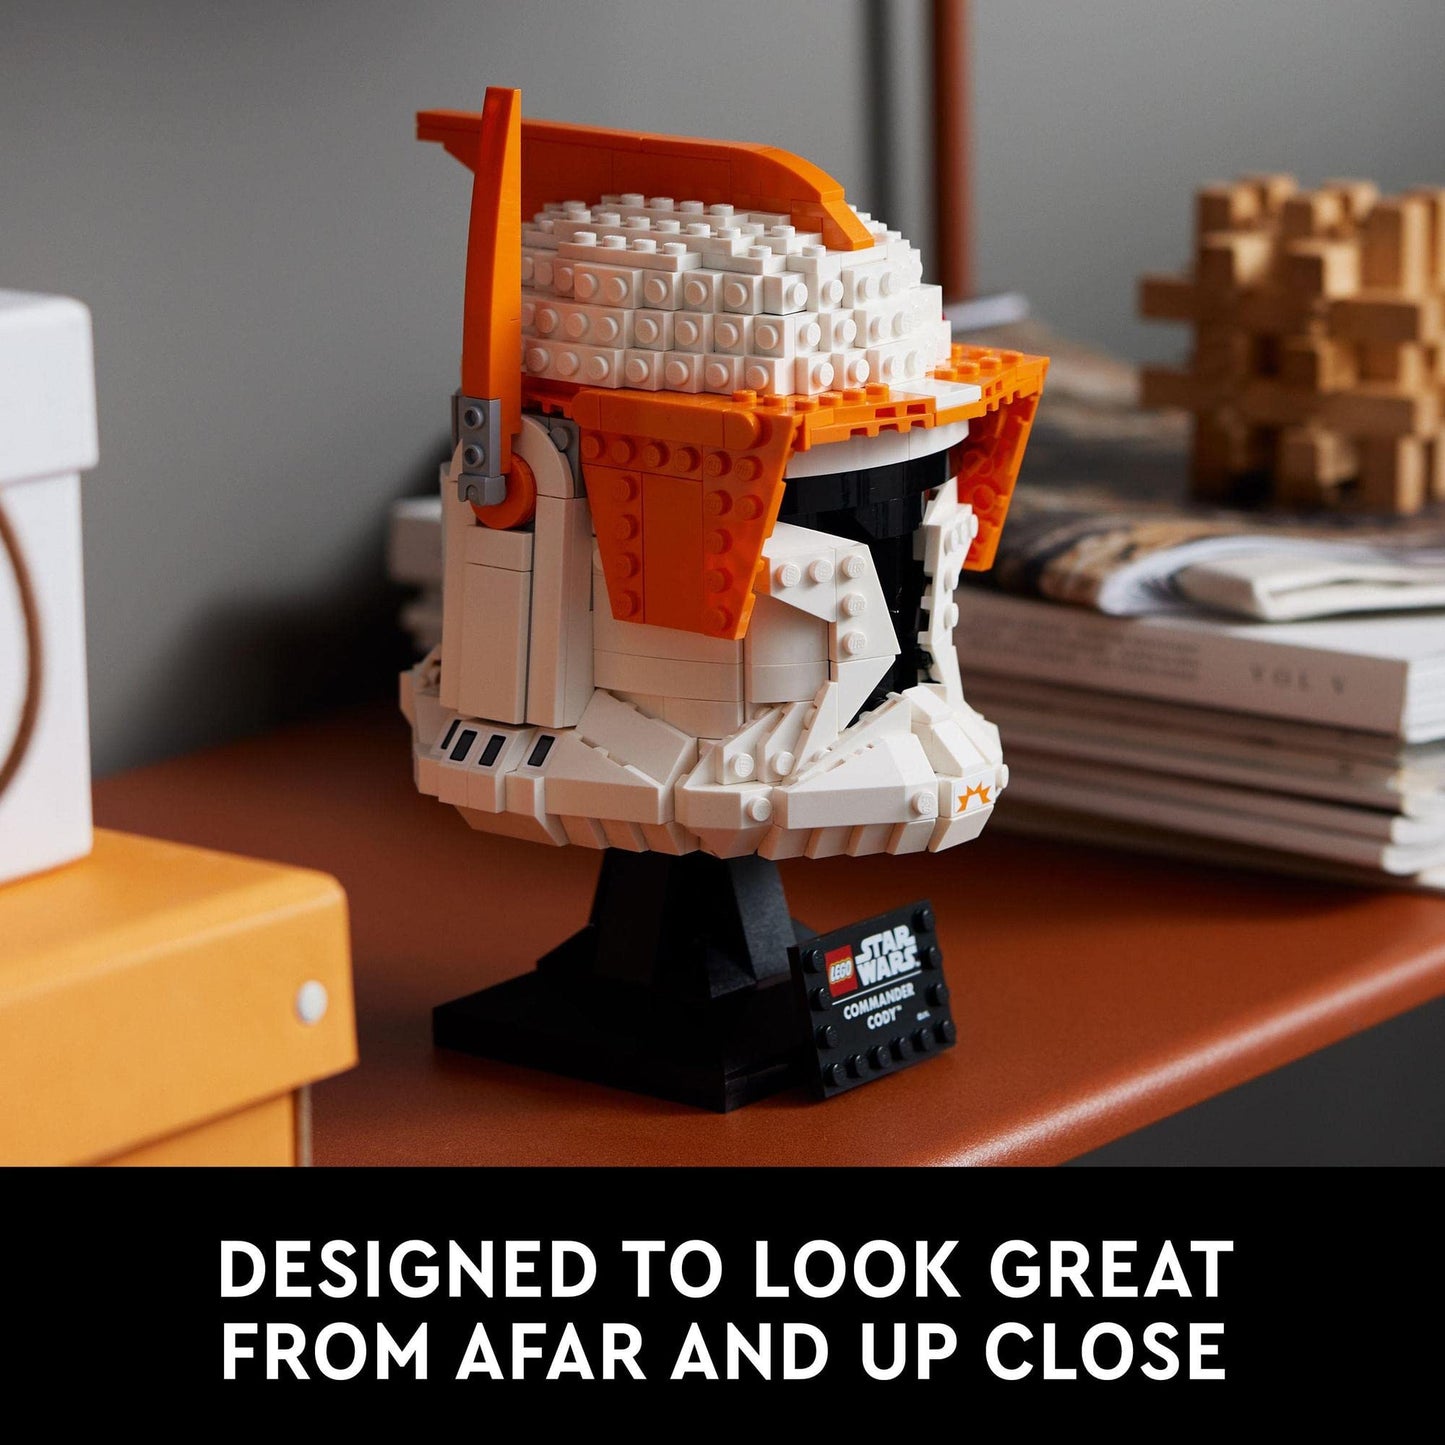 LEGO® Star Wars™ Clone Commander Cody™ Helmet 75350